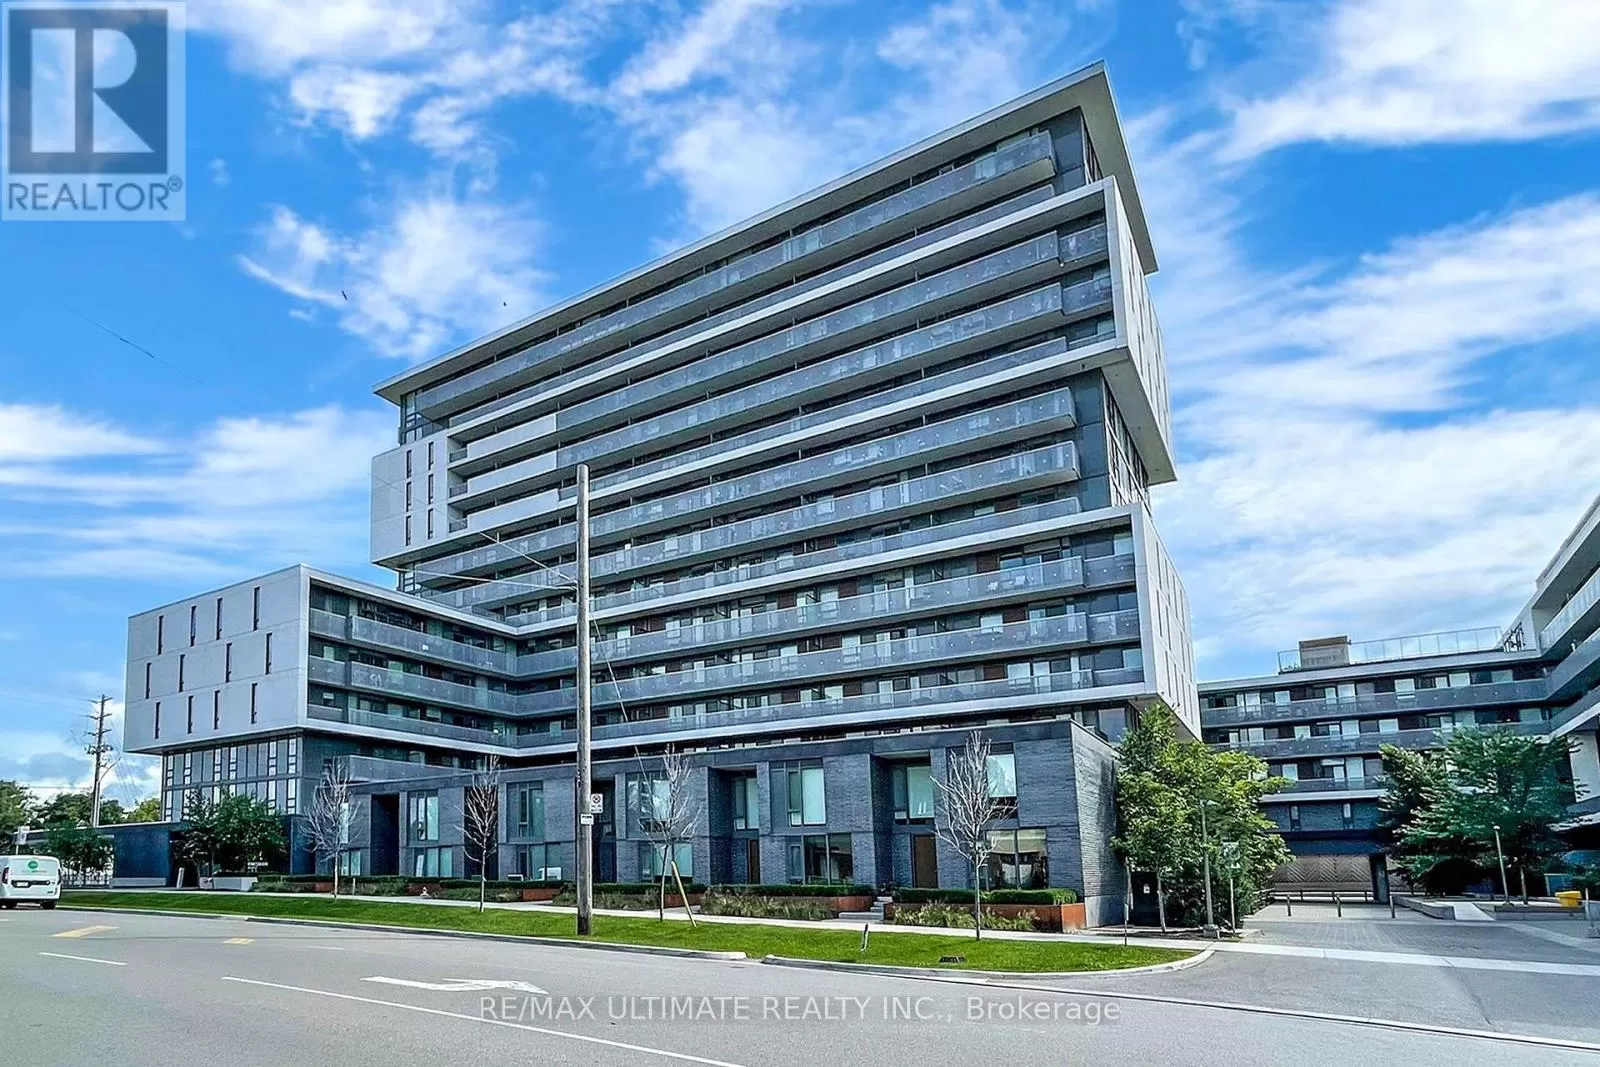 Apartment for rent: 705 - 160 Flemington Road, Toronto, Ontario M6A 0A9